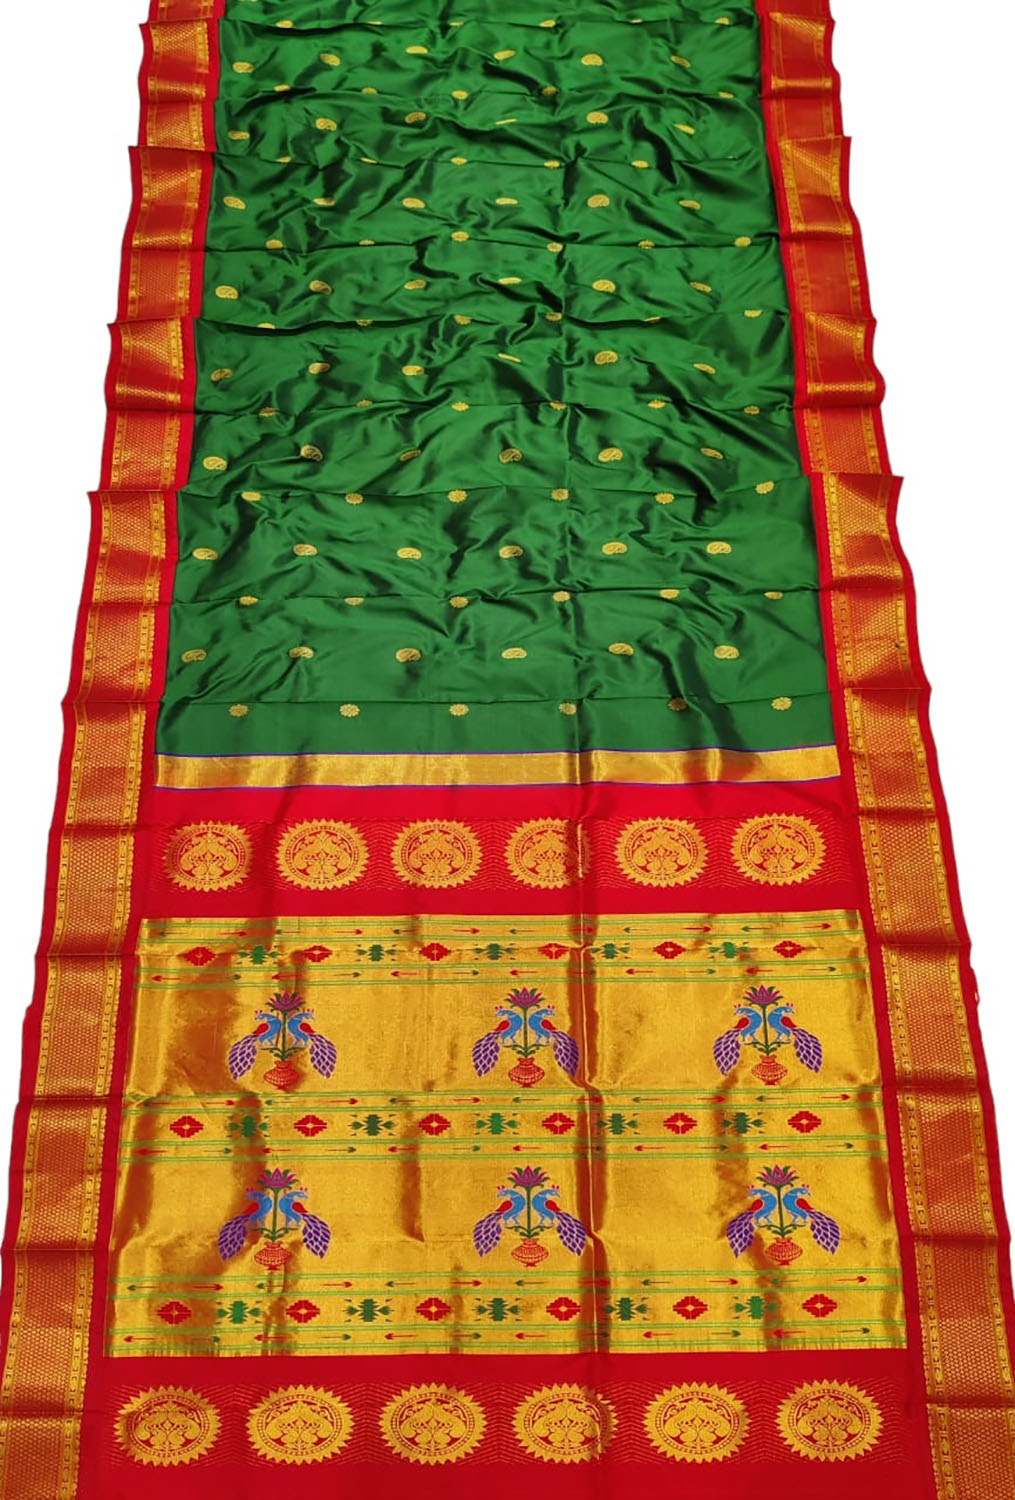 Handloom Silk Peacock Saree - Green and Red Paithani Design